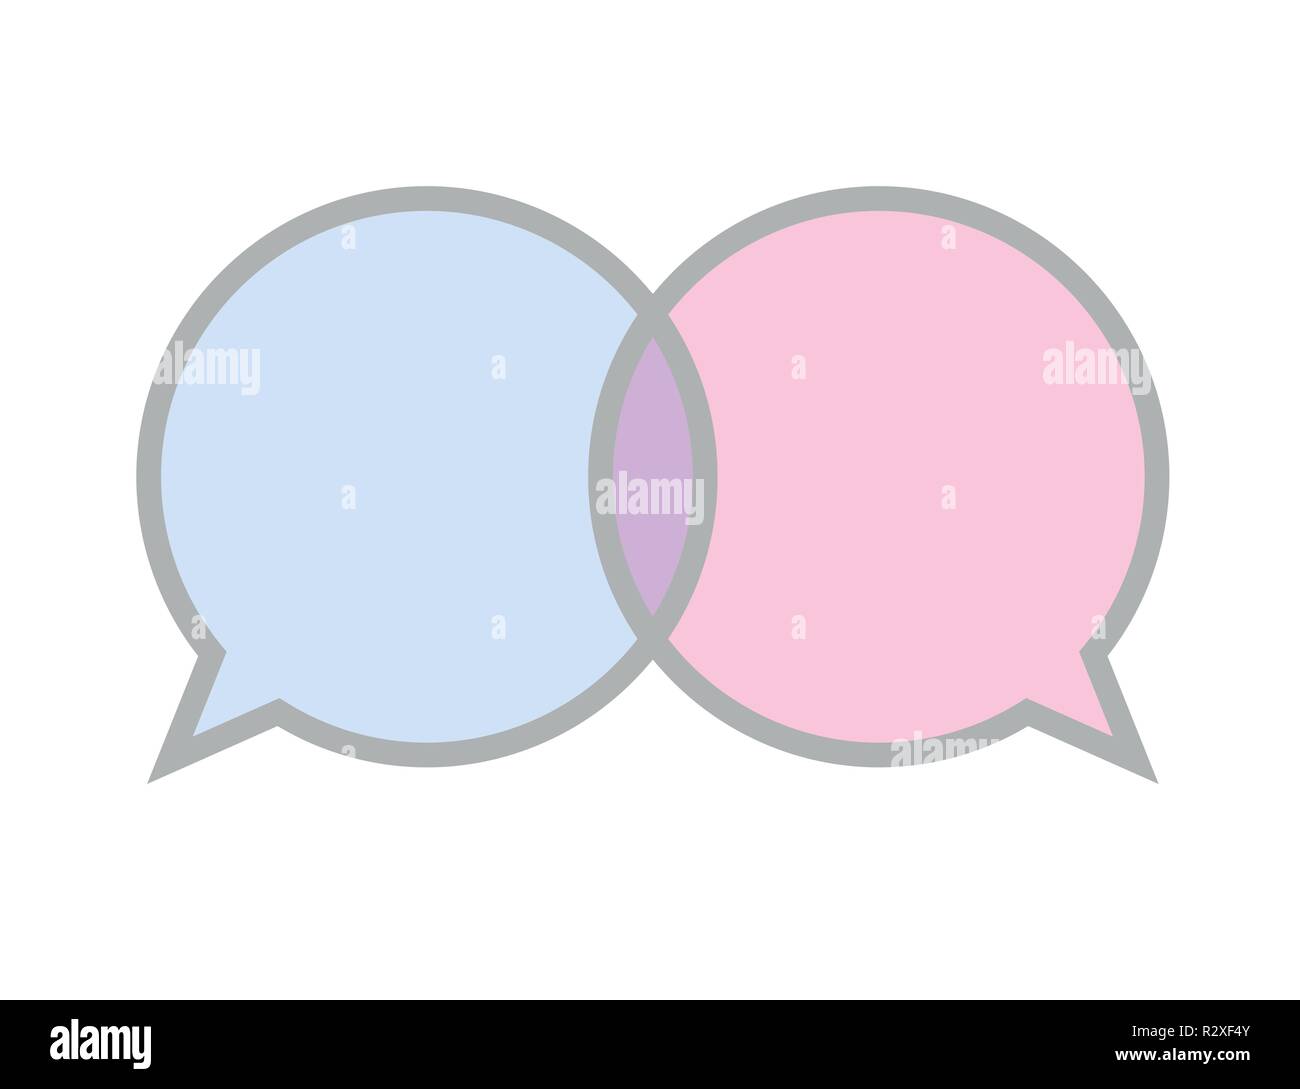 Kommunikation das Symbol blau und rosa Sprechblasen-symbol Vektor-illustration EPS 10. Stock Vektor